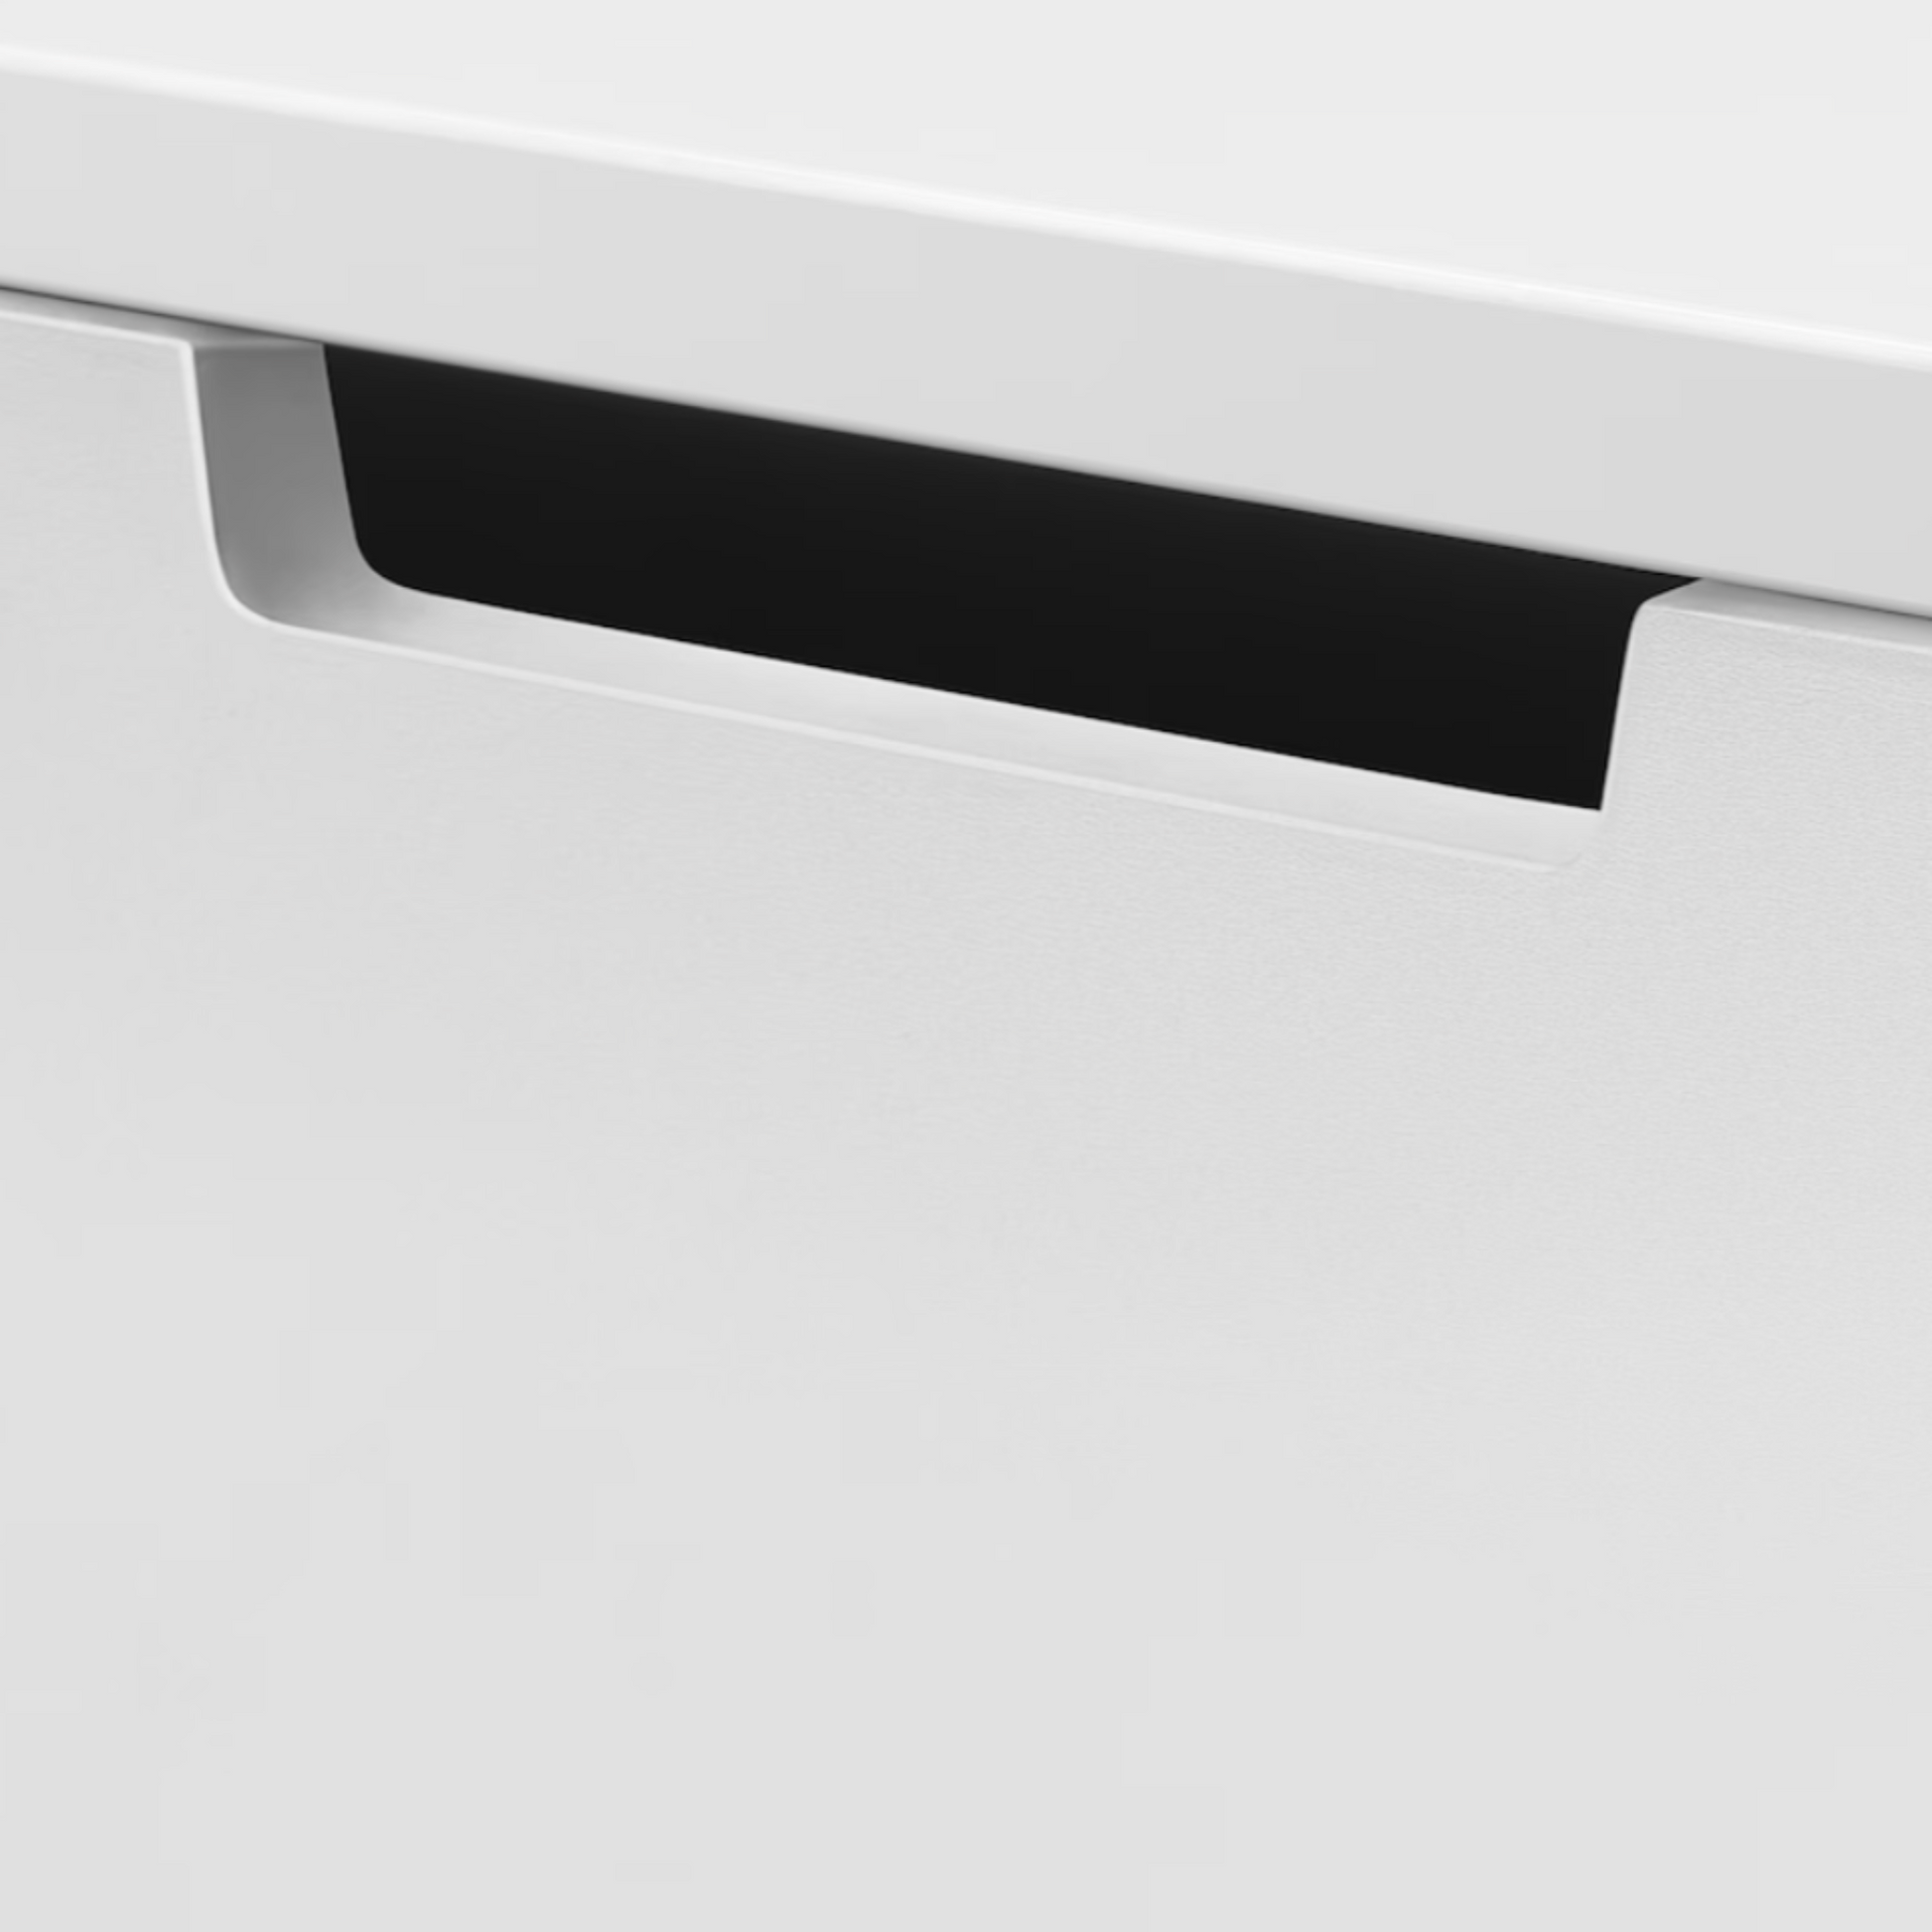 Ikea Nordli Chest of 4-Drawers, 160x54cm, White (8130889056543)